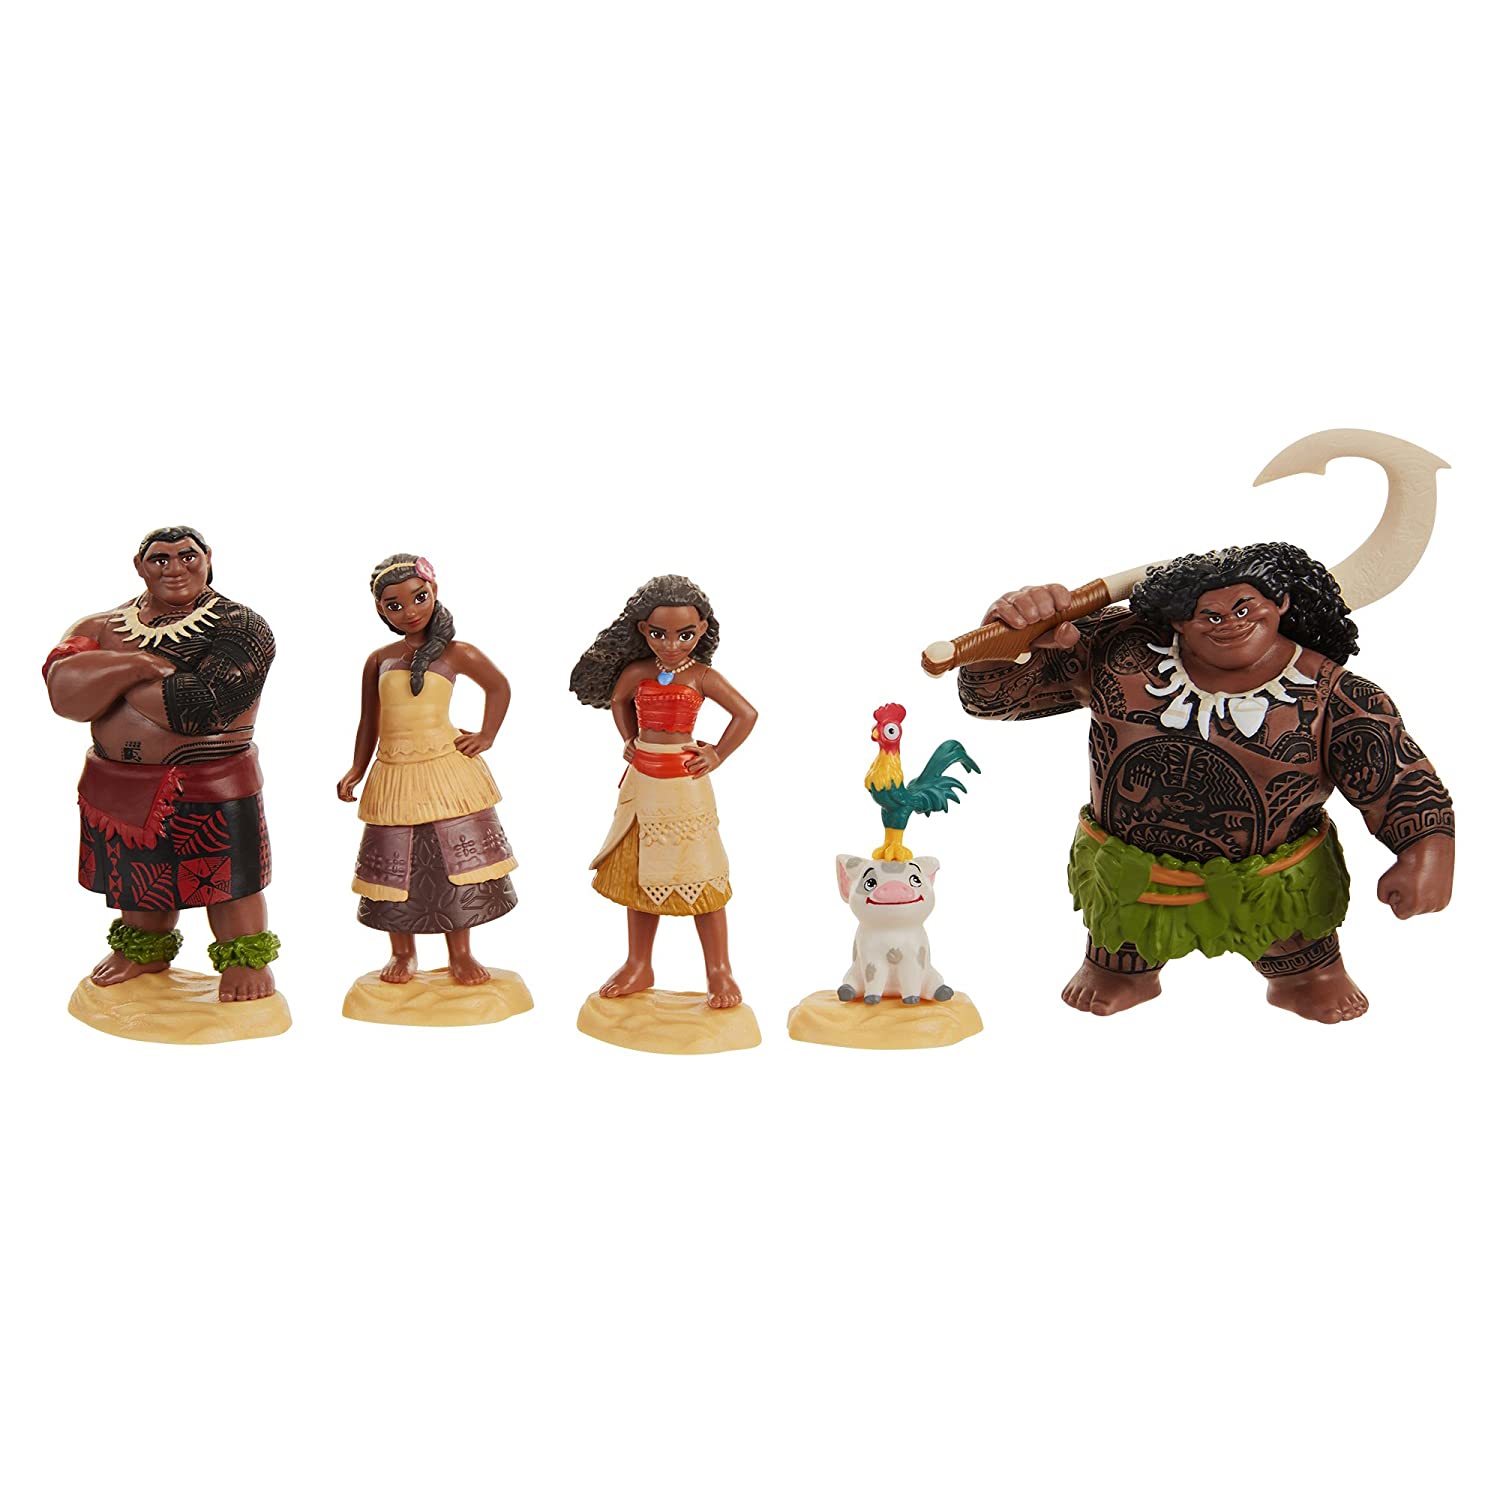 Moana Disney's Figure Set Toy Figure